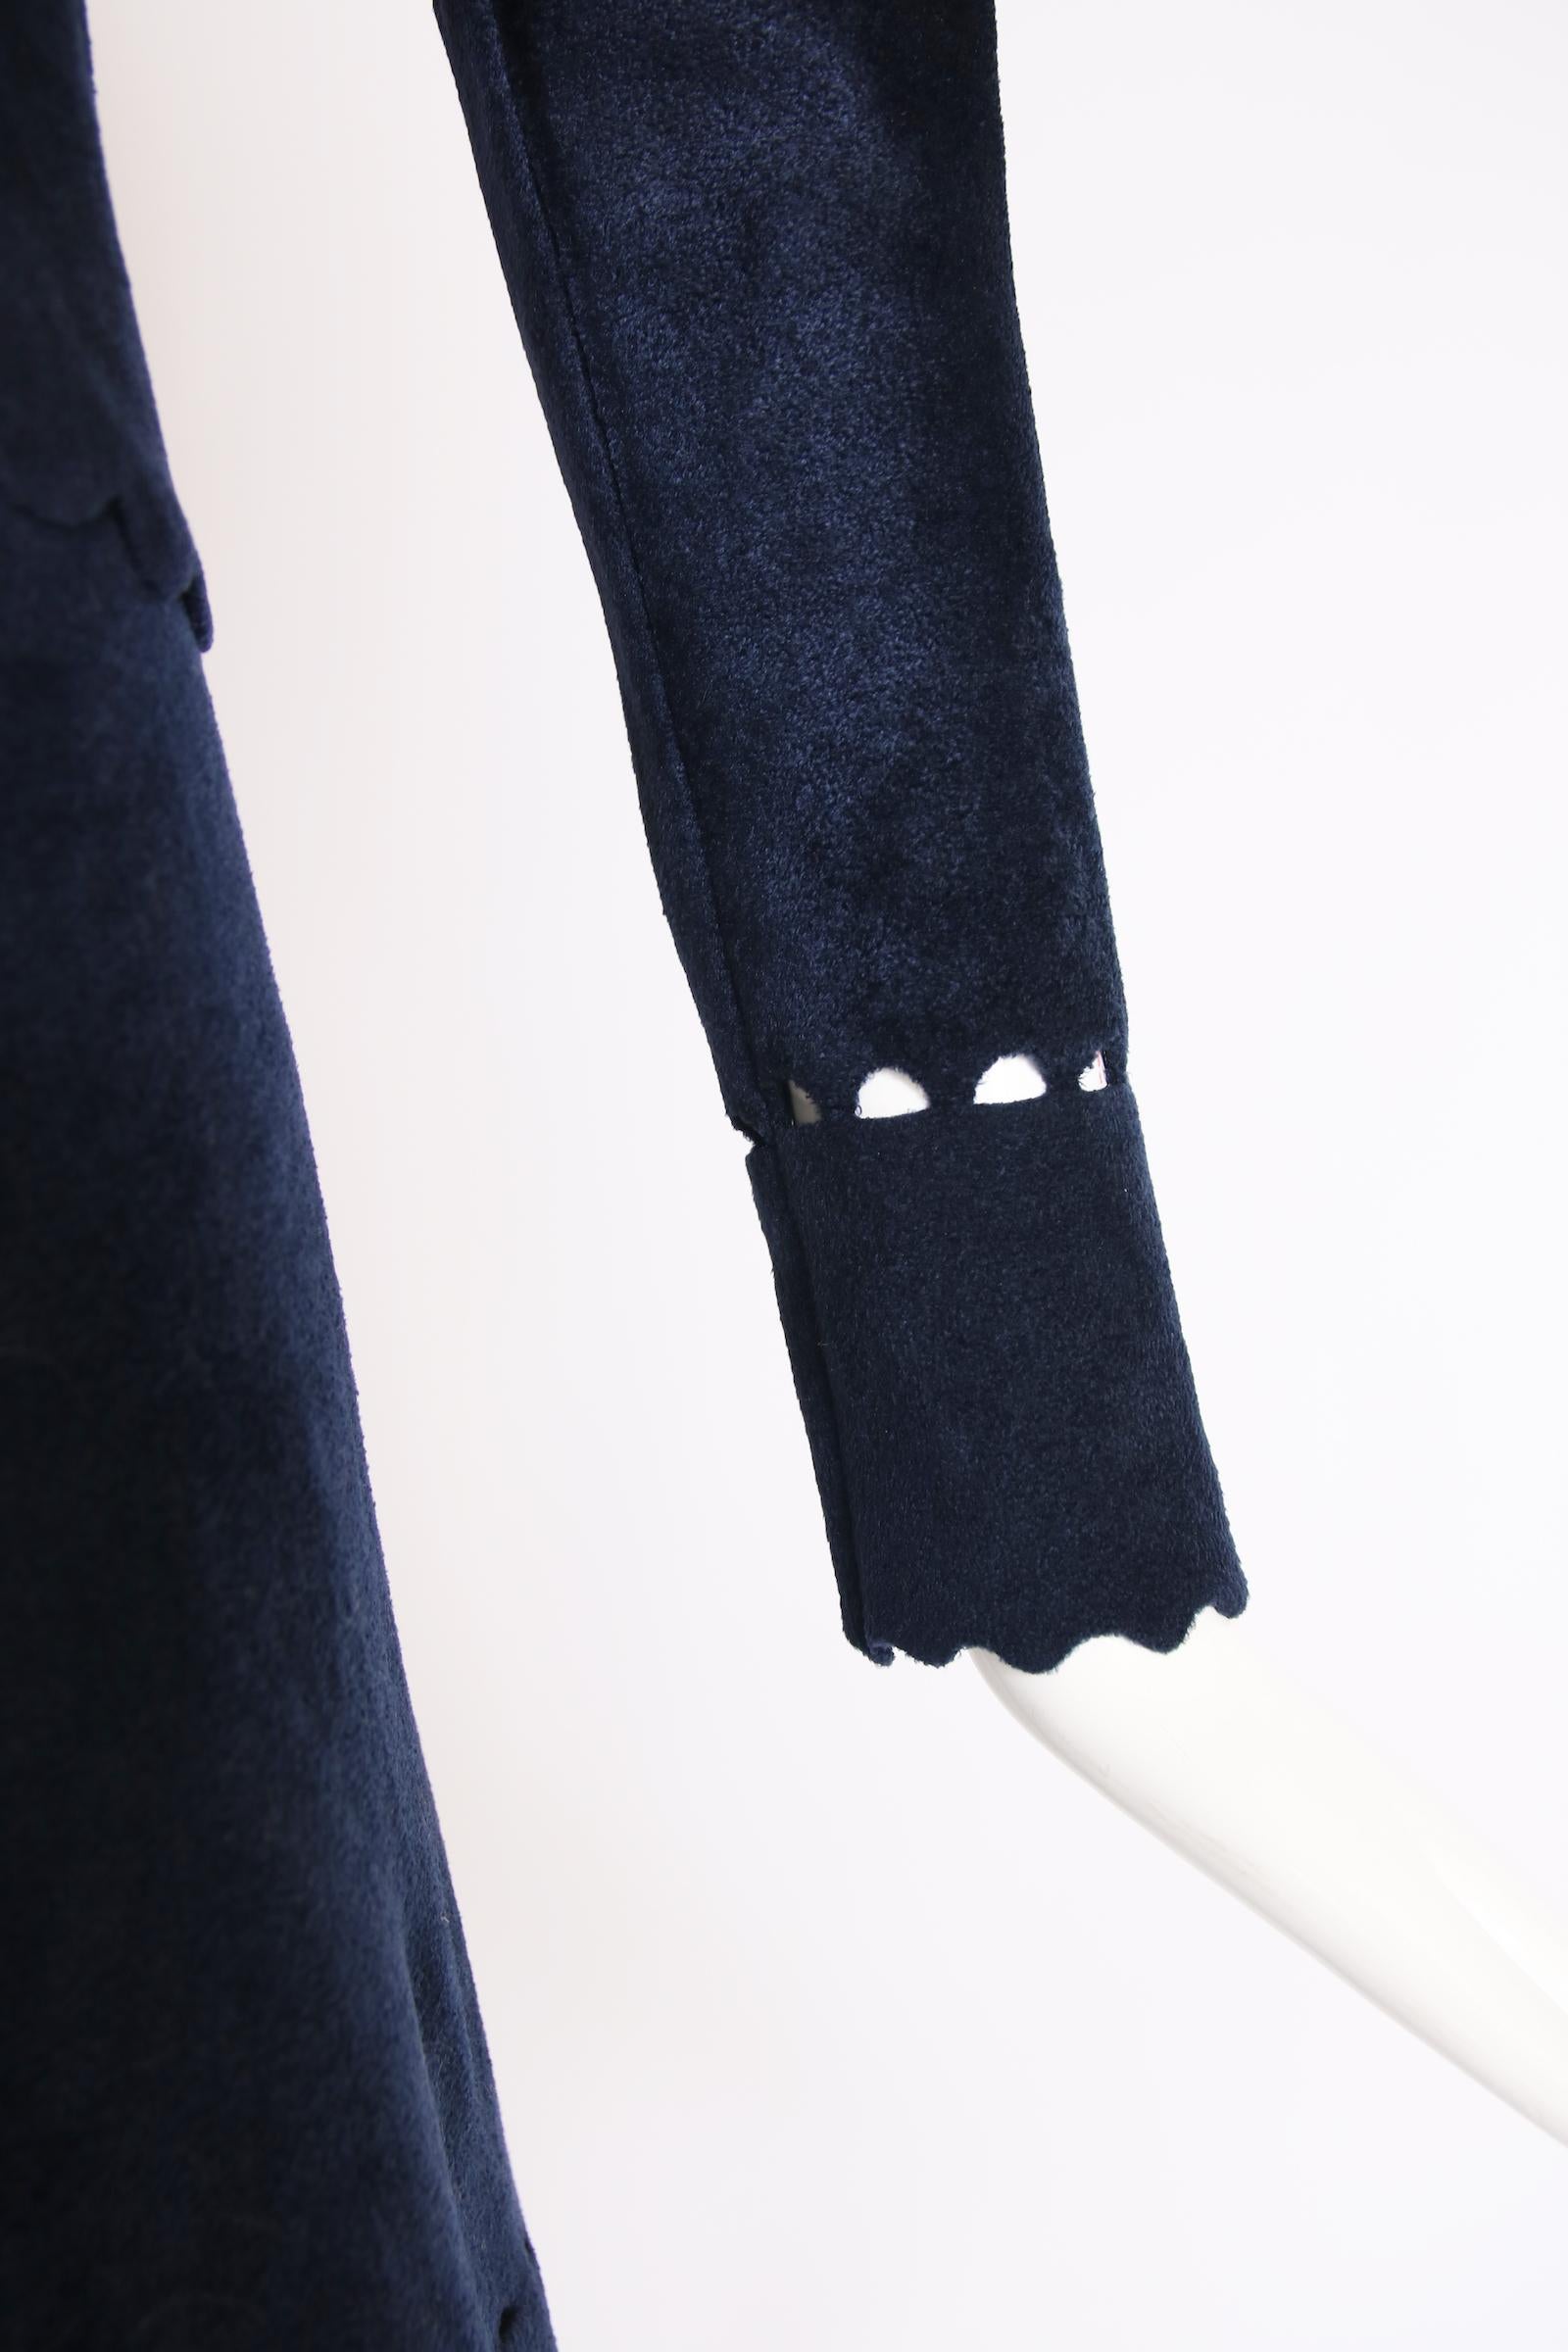 Women's Alaia Midnight Blue Top & Skirt Ensemble w/Cutouts For Sale